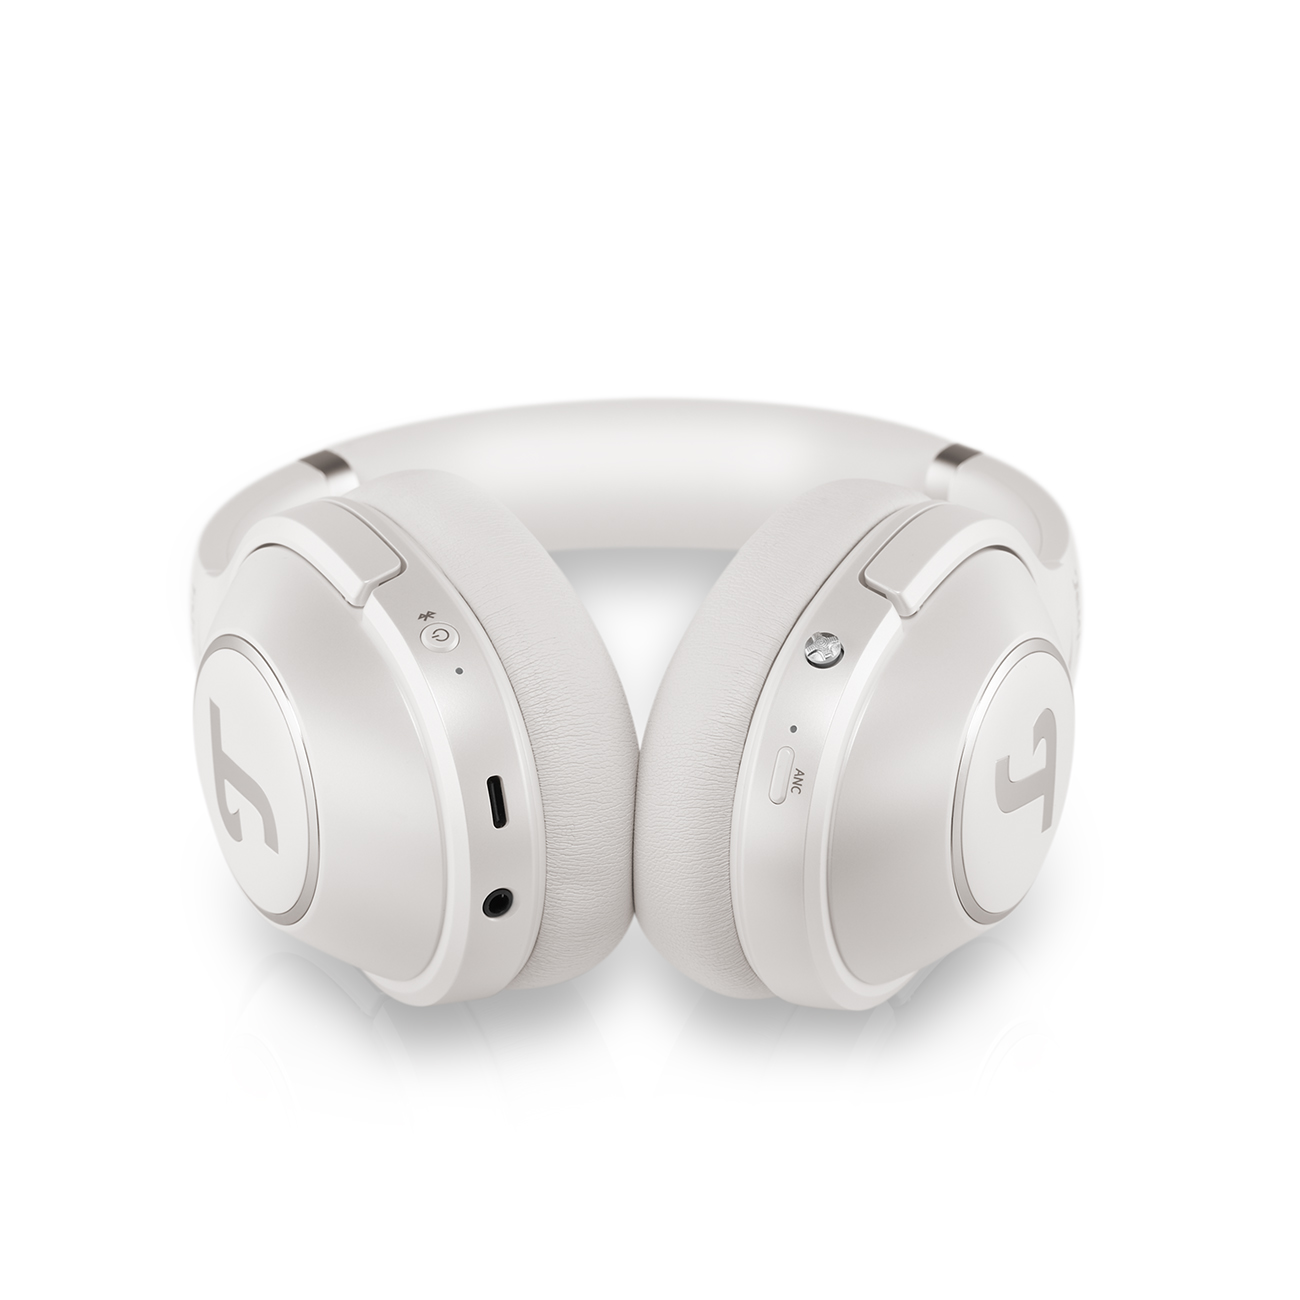 TEUFEL REAL BLUE NC, Bluetooth Kopfhörer Pearl Over-ear White